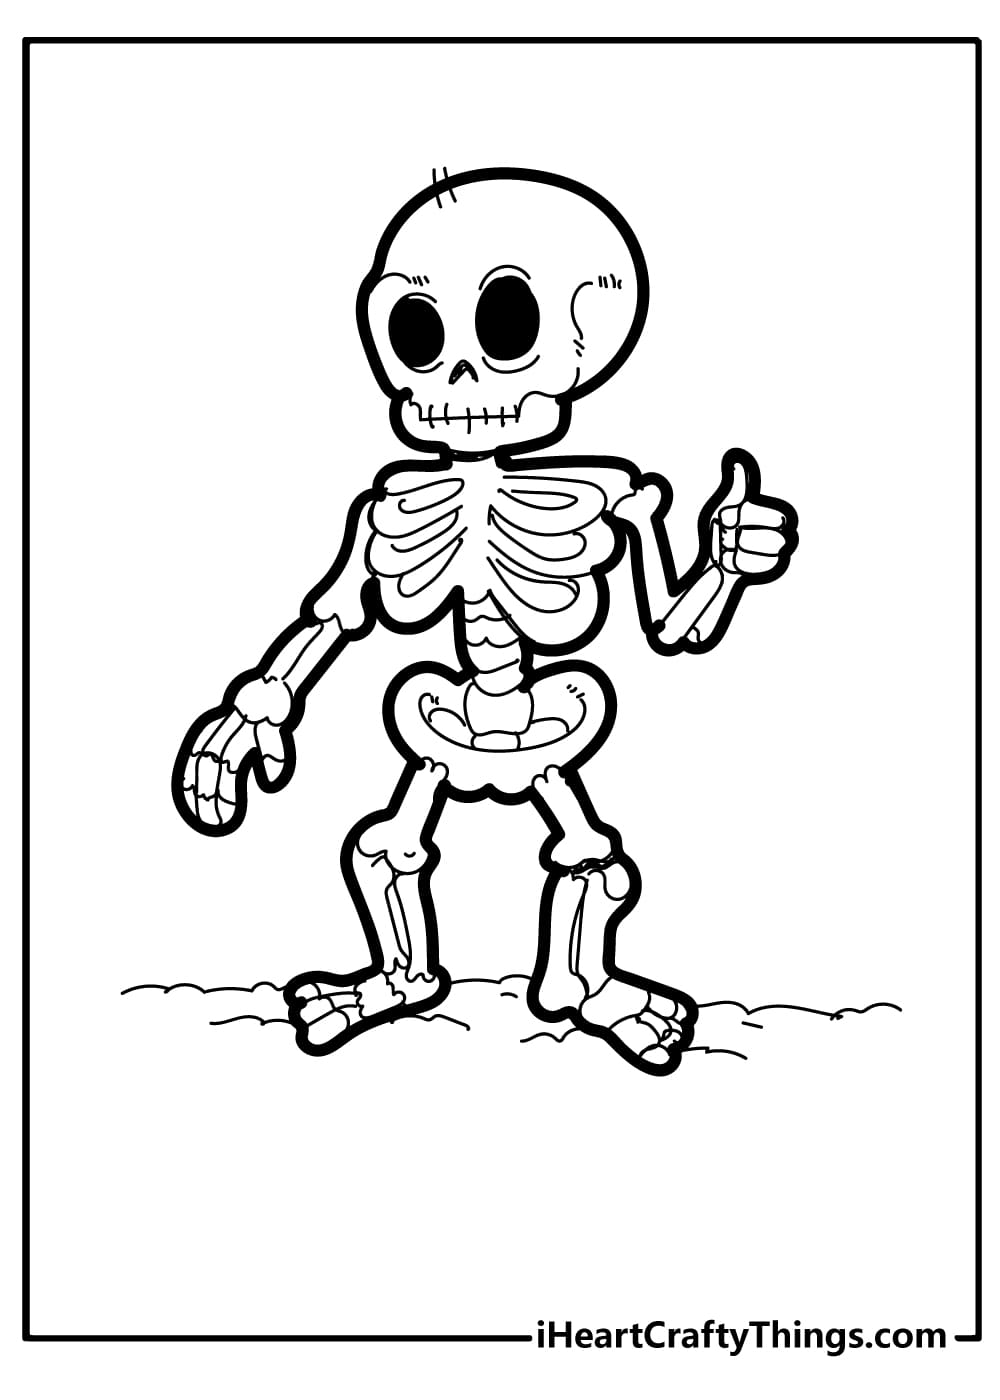 Skeleton Cutout Image